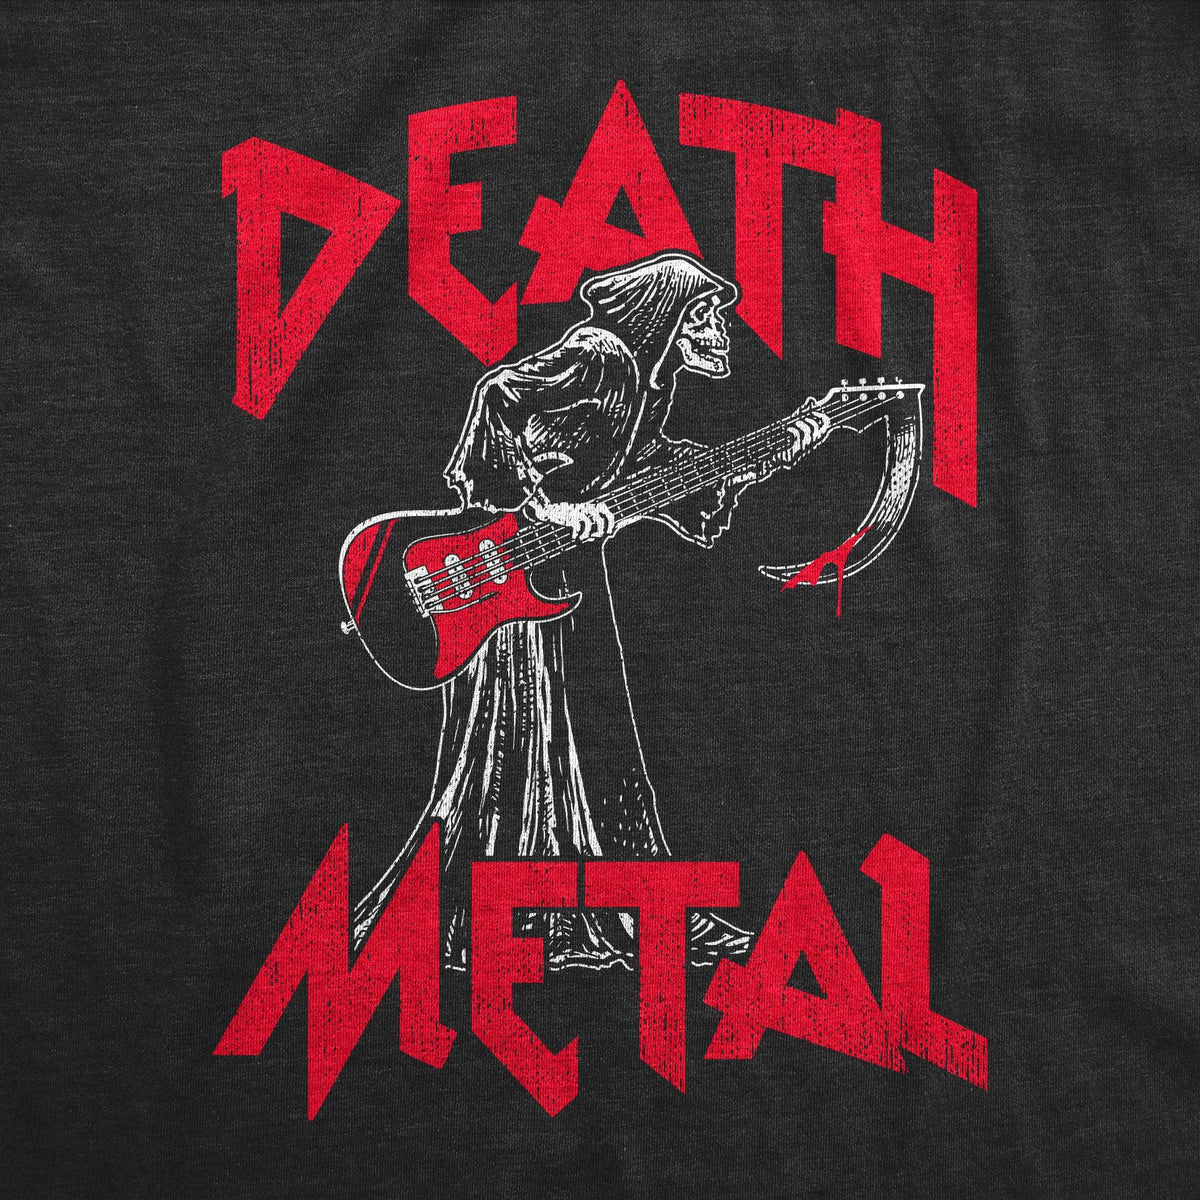 Death Metal Women&#39;s Tshirt  -  Crazy Dog T-Shirts